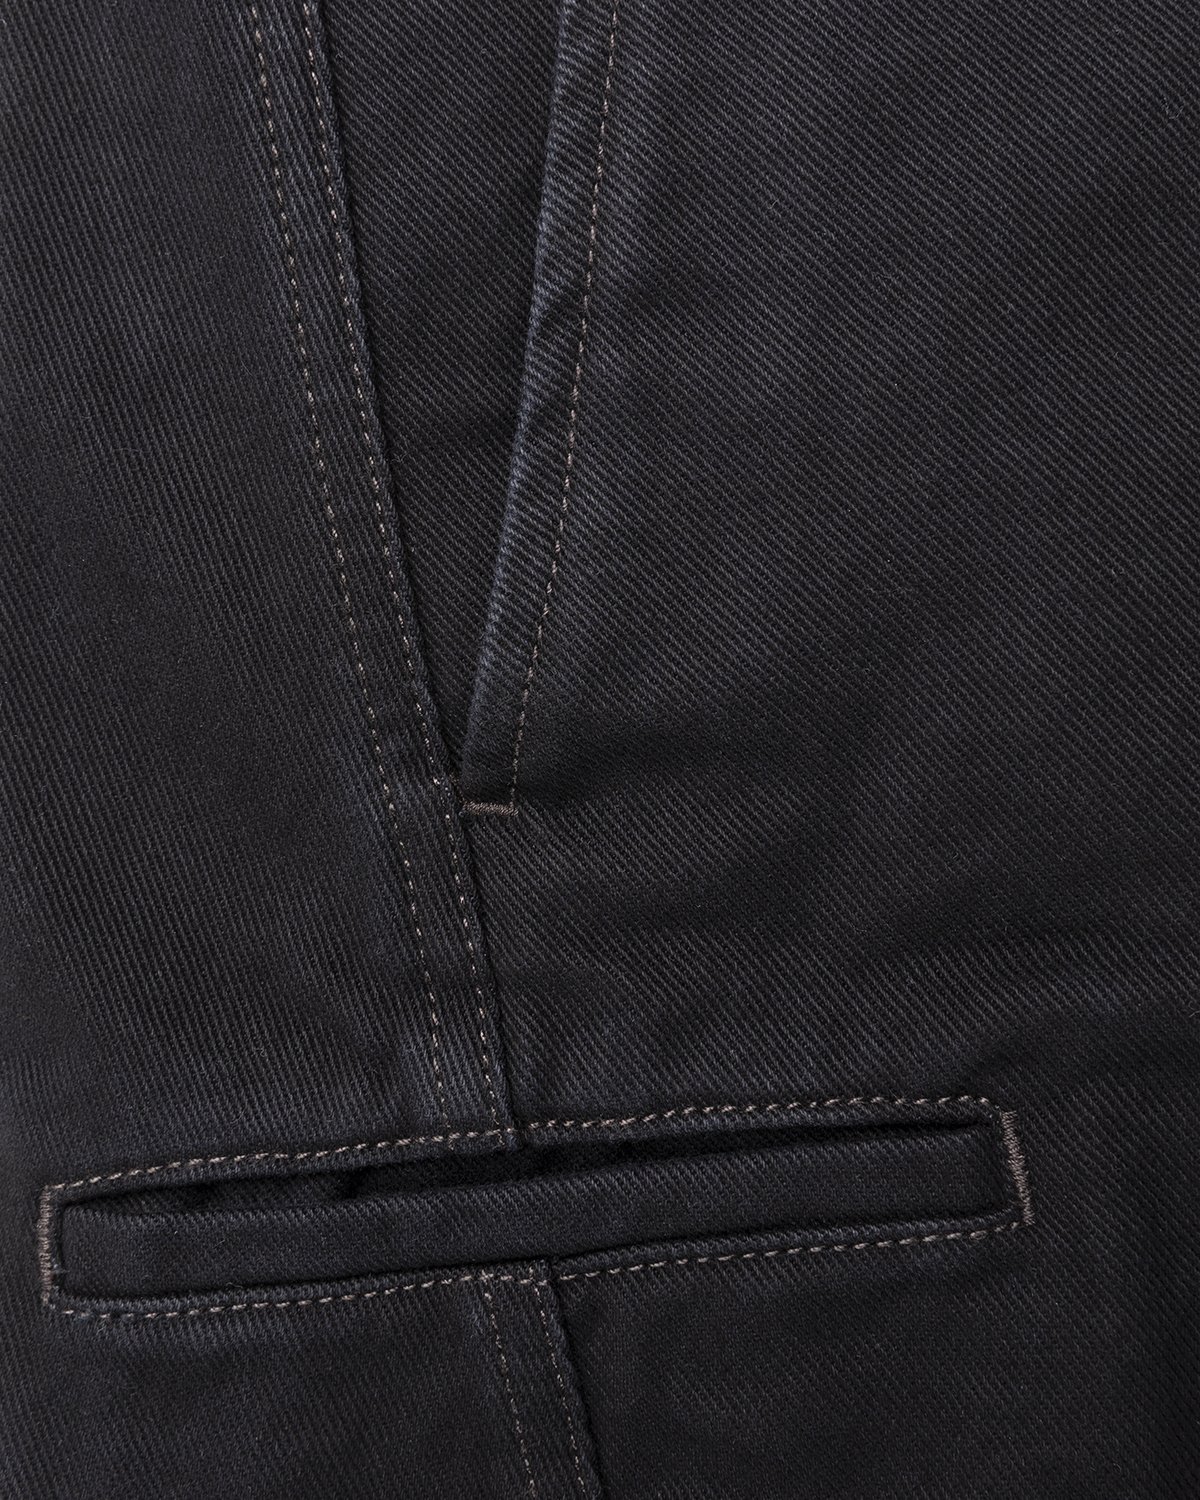 Lemaire - Rinsed Denim Twisted Pants Black - Clothing - Black - Image 5